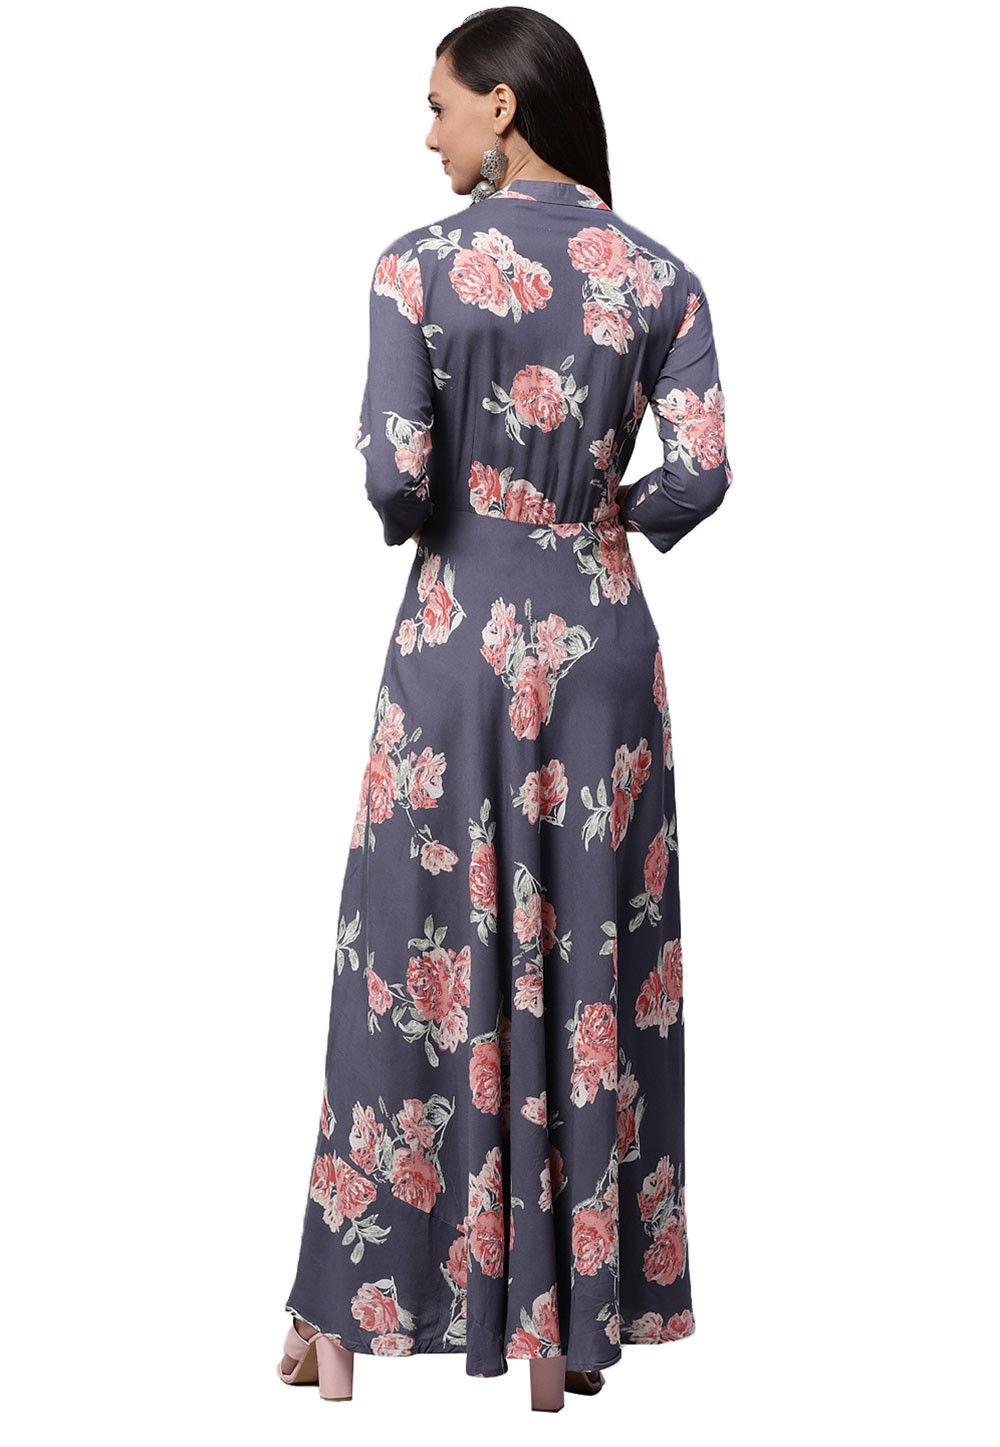 Digital Printed Viscose Rayon Maxi Dress in Grey : TKV92